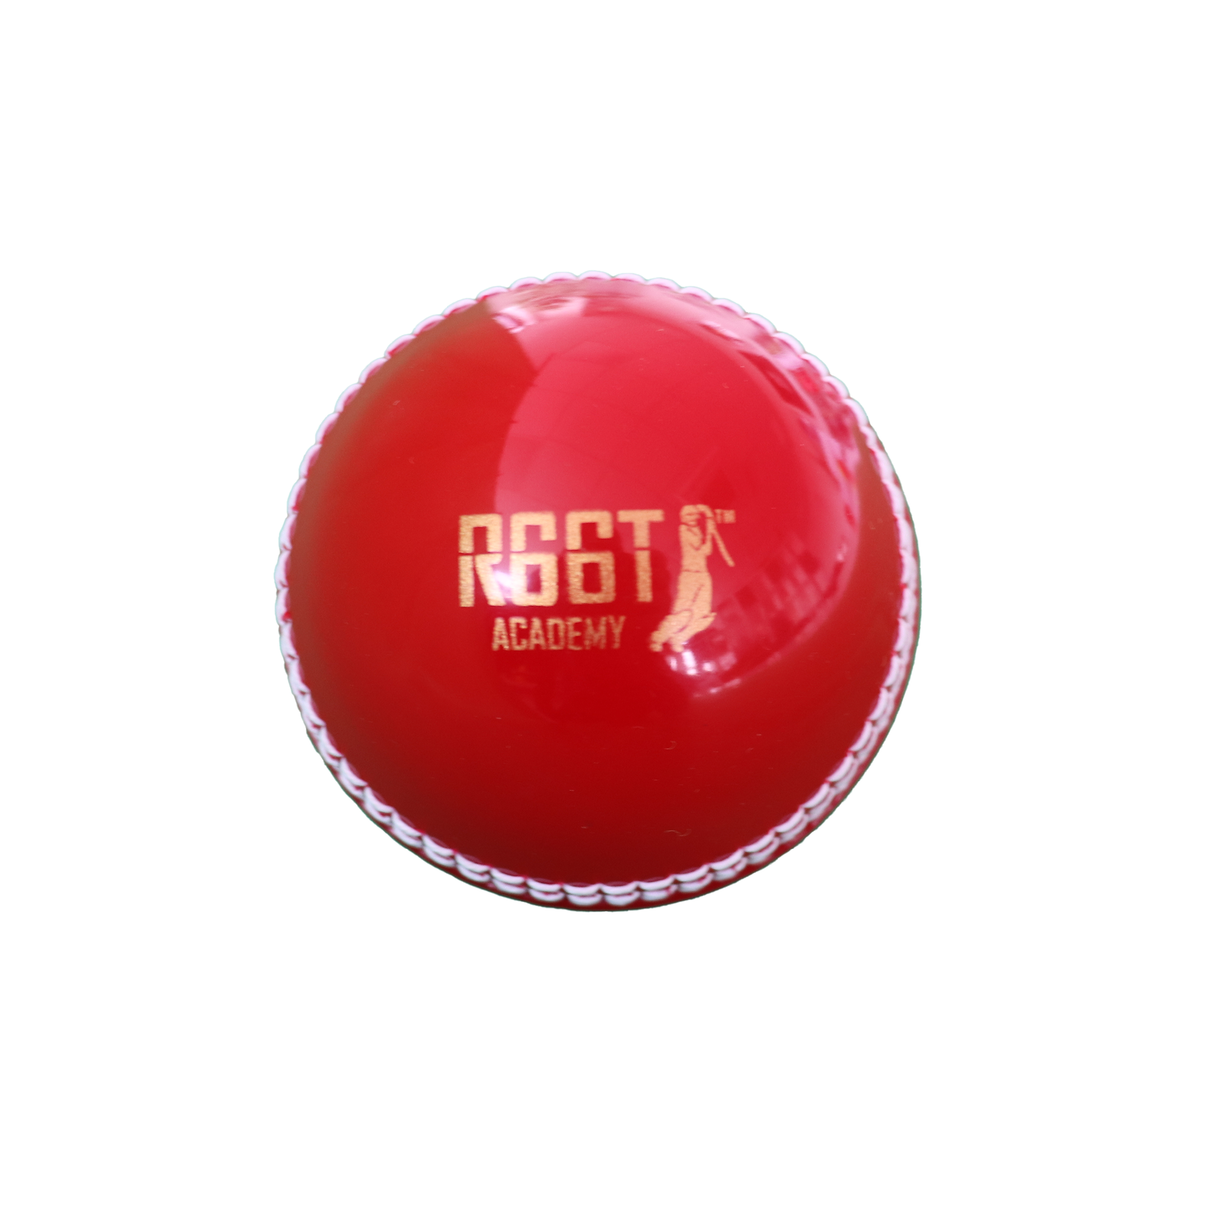 R66T Academy Cricket Variety Ball Bag